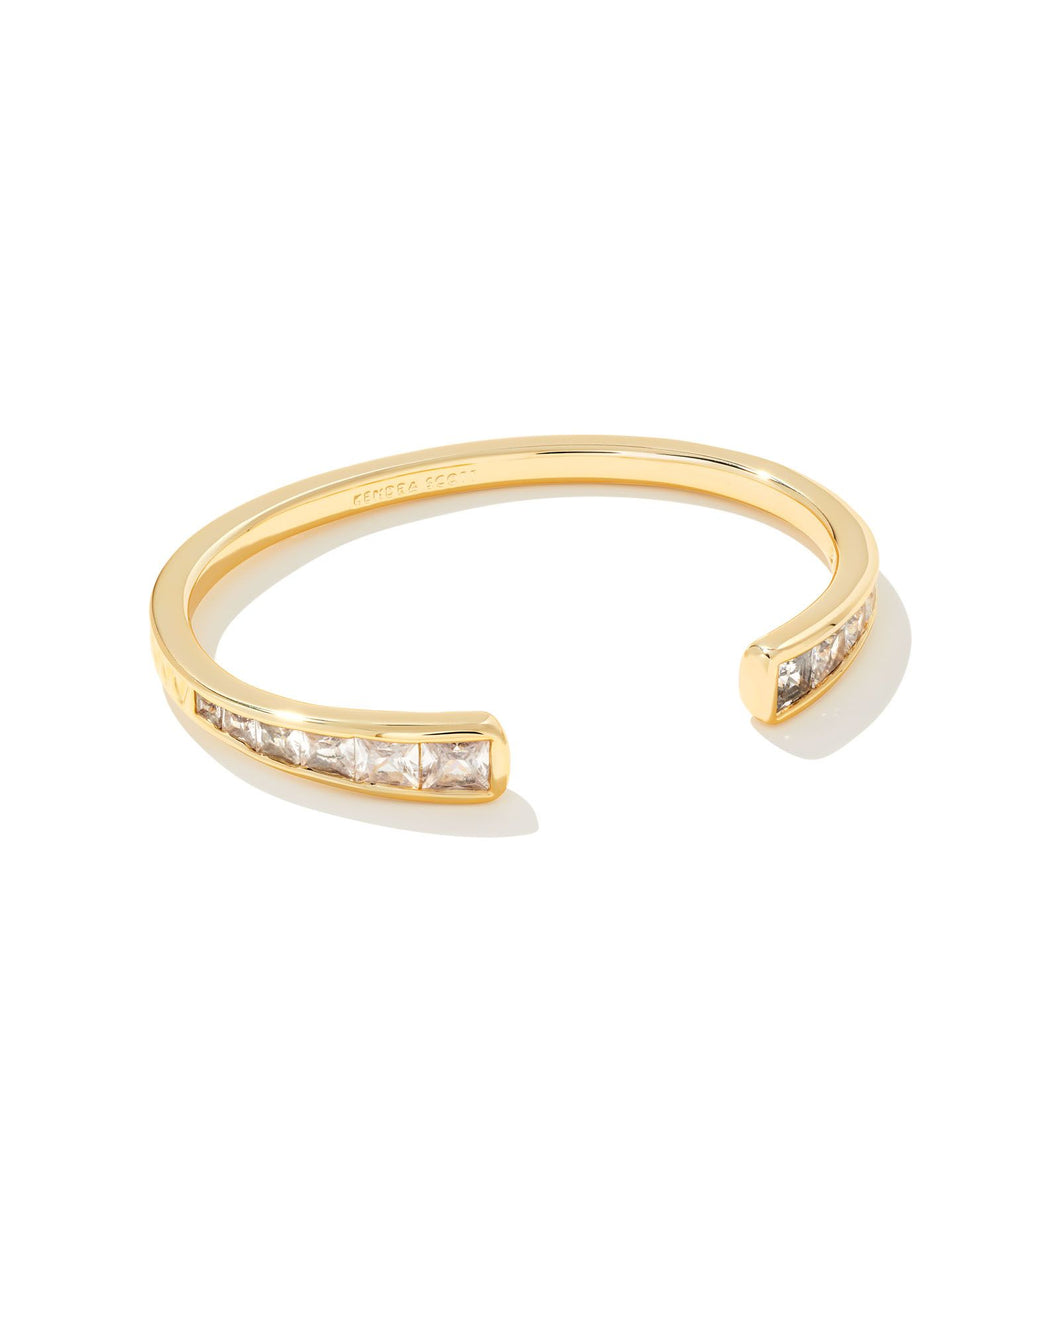 Parker Gold Cuff Bracelet in White Crystal by Kendra Scott